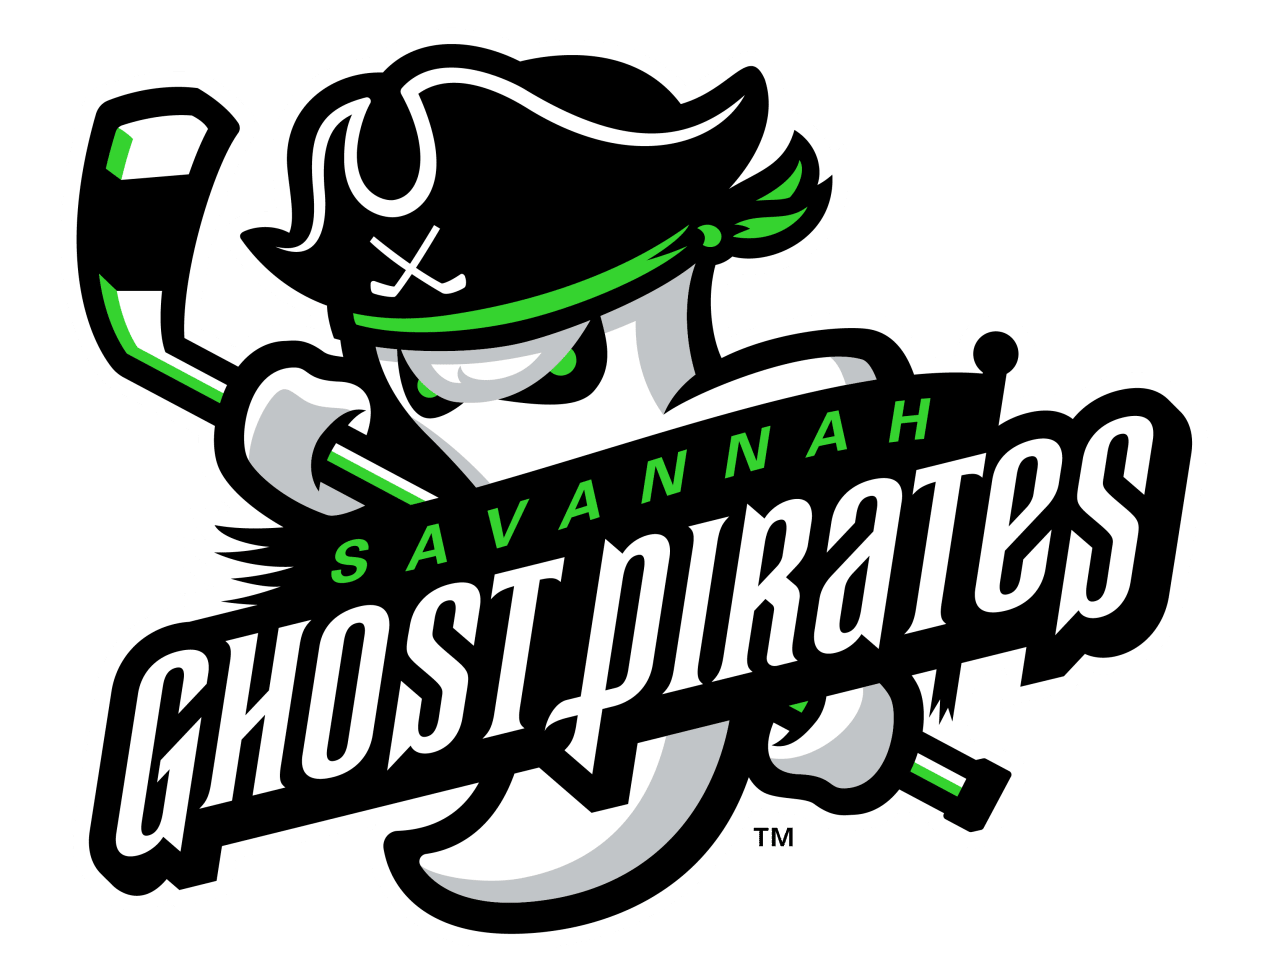 https://www.ghostpirateshockey.com/

Photo Credit: Savannah Ghost Pirates